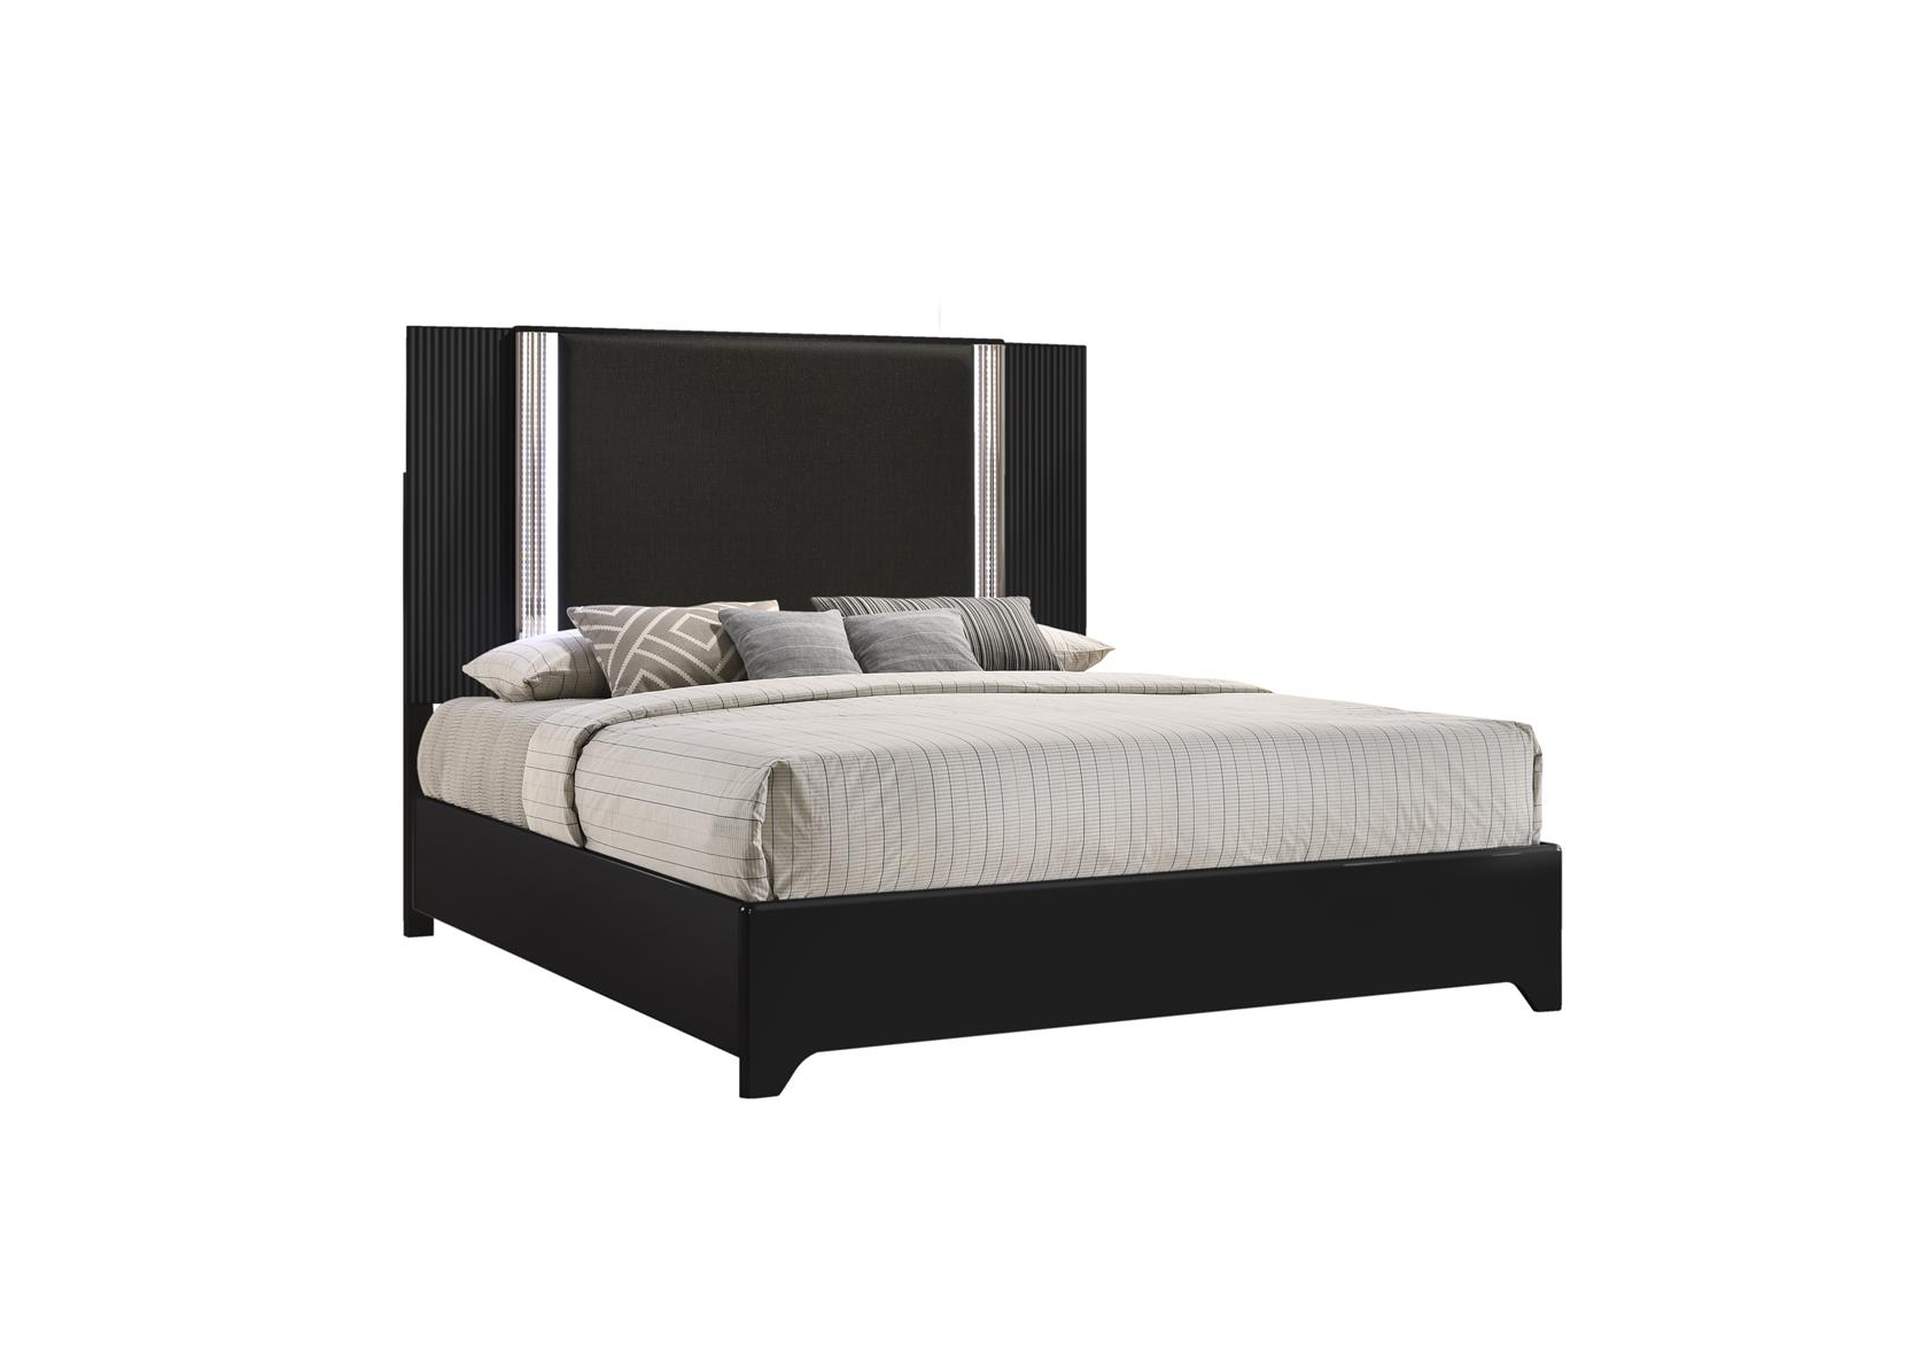 Aspen Black King Bed,Global Furniture USA